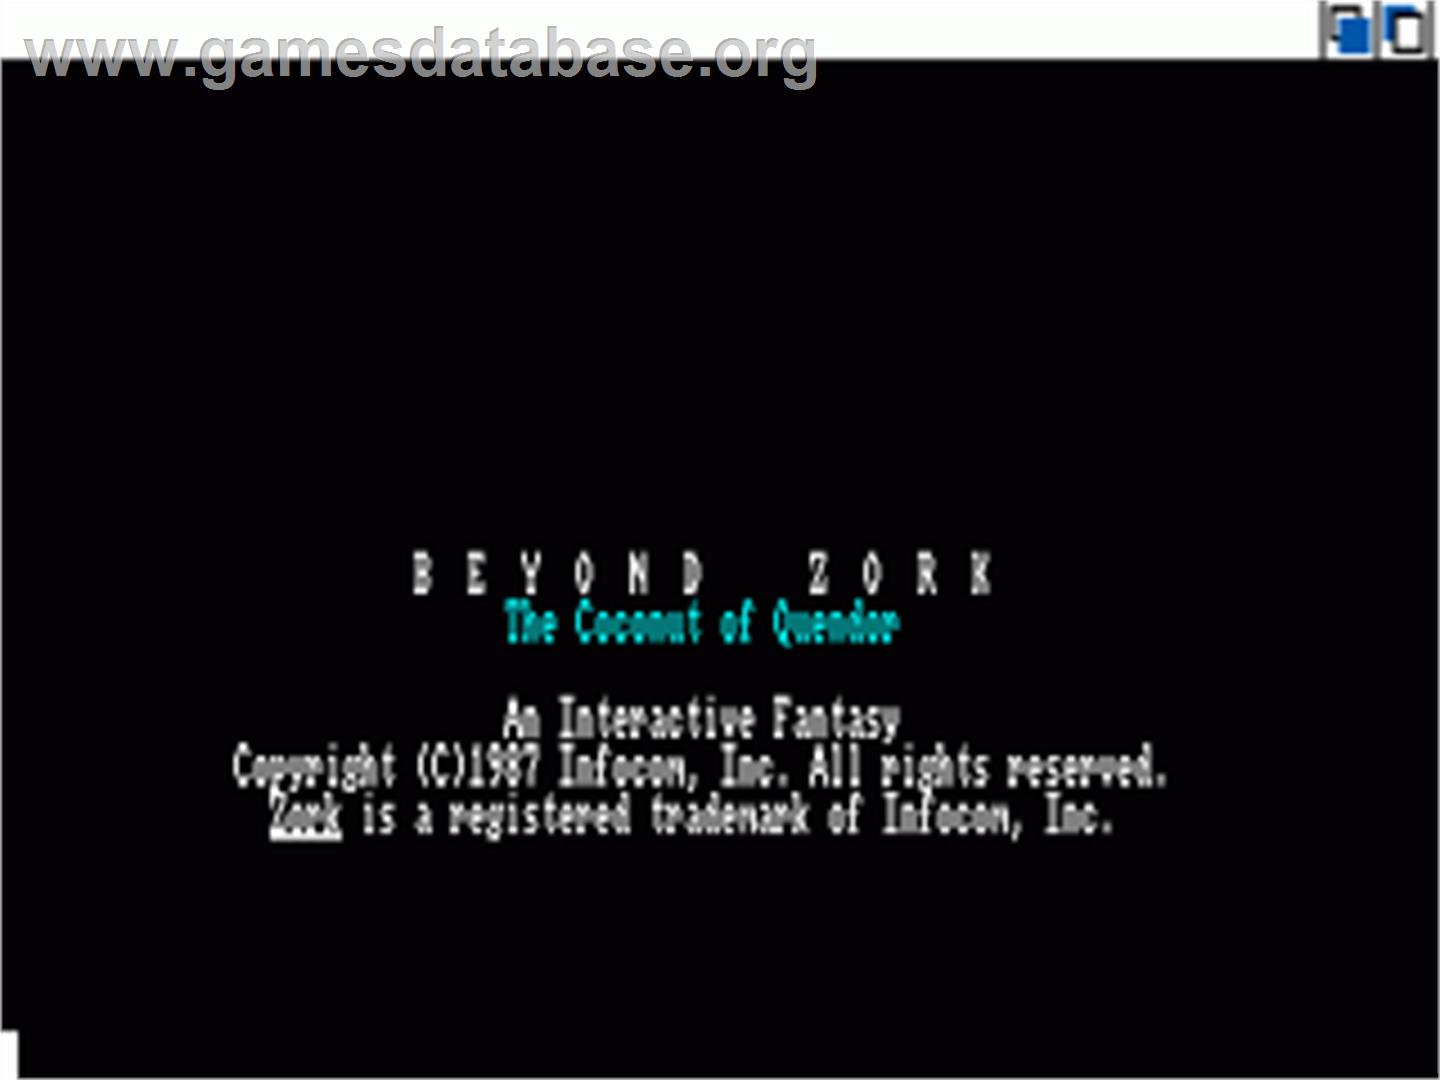 Beyond Zork: The Coconut of Quendor - Commodore Amiga - Artwork - Title Screen